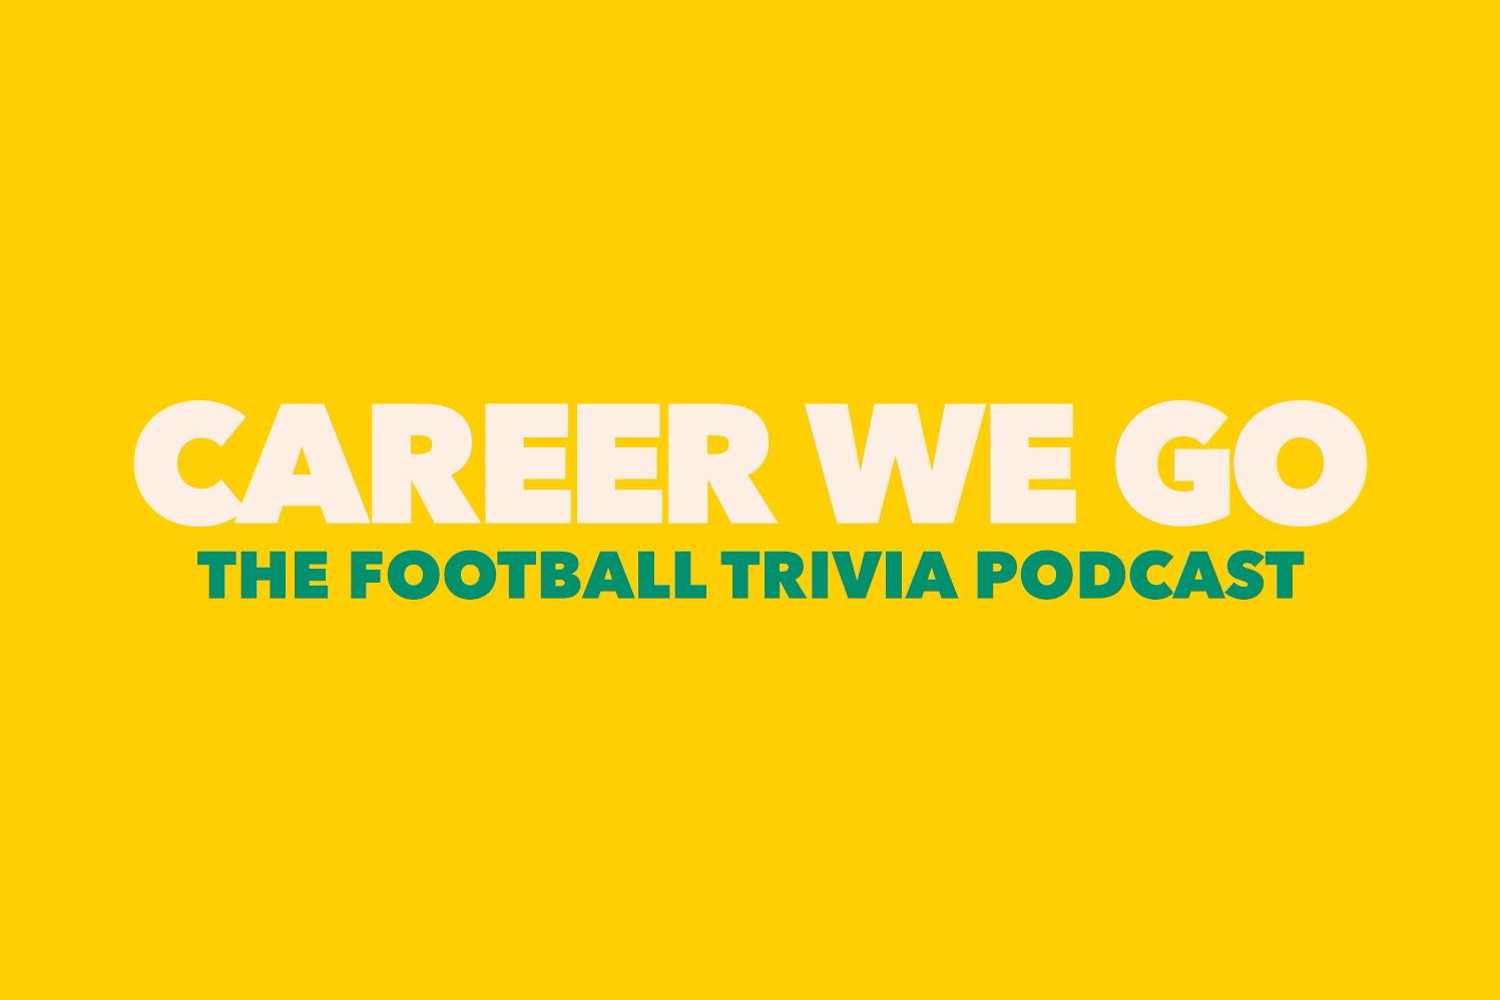 Career We Go - The Football Trivia Podcast